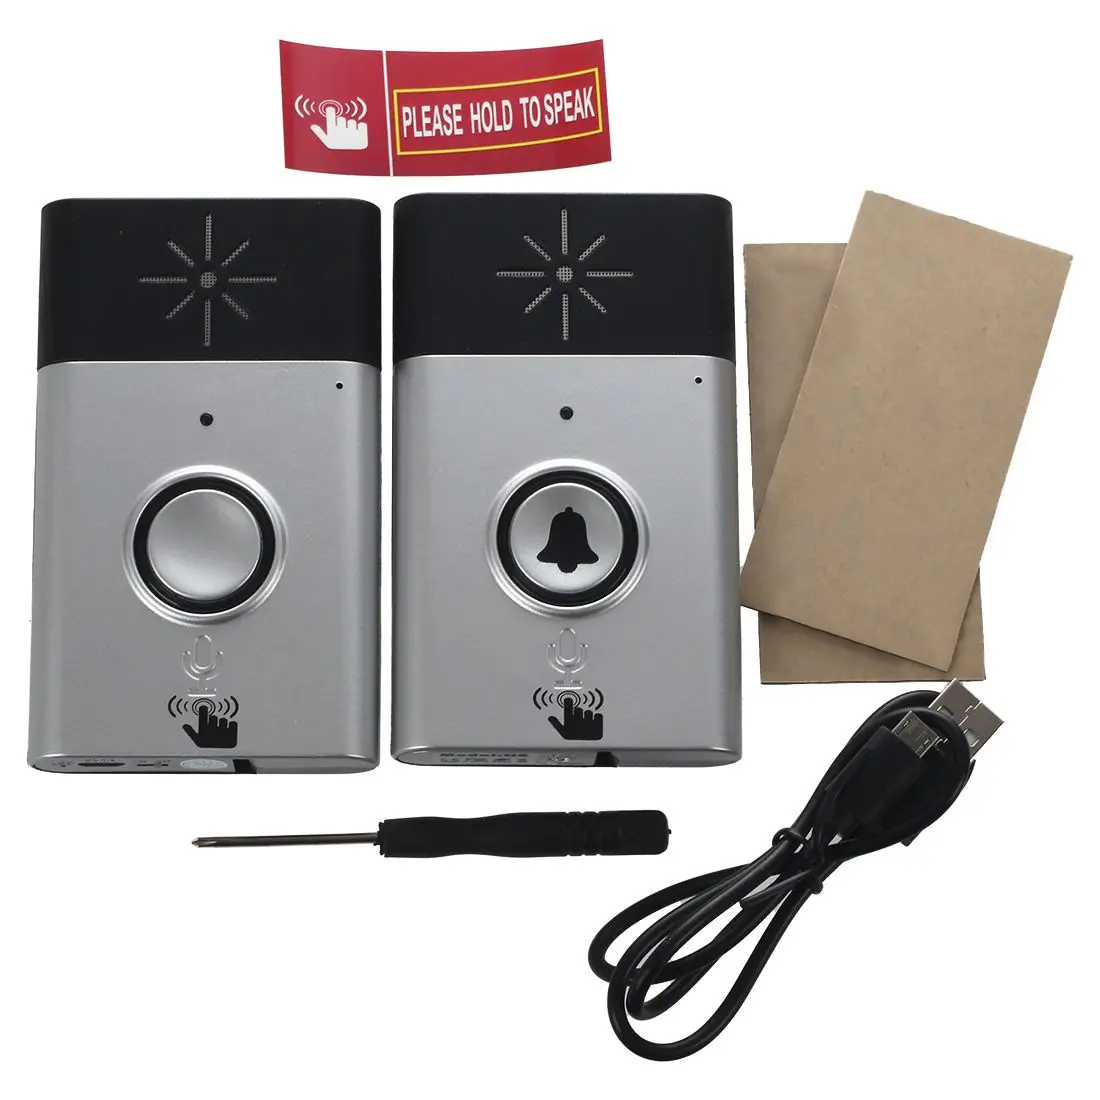 

ELEG-Wireless Doorbell With Speaker Voice Intercom 300M Distance